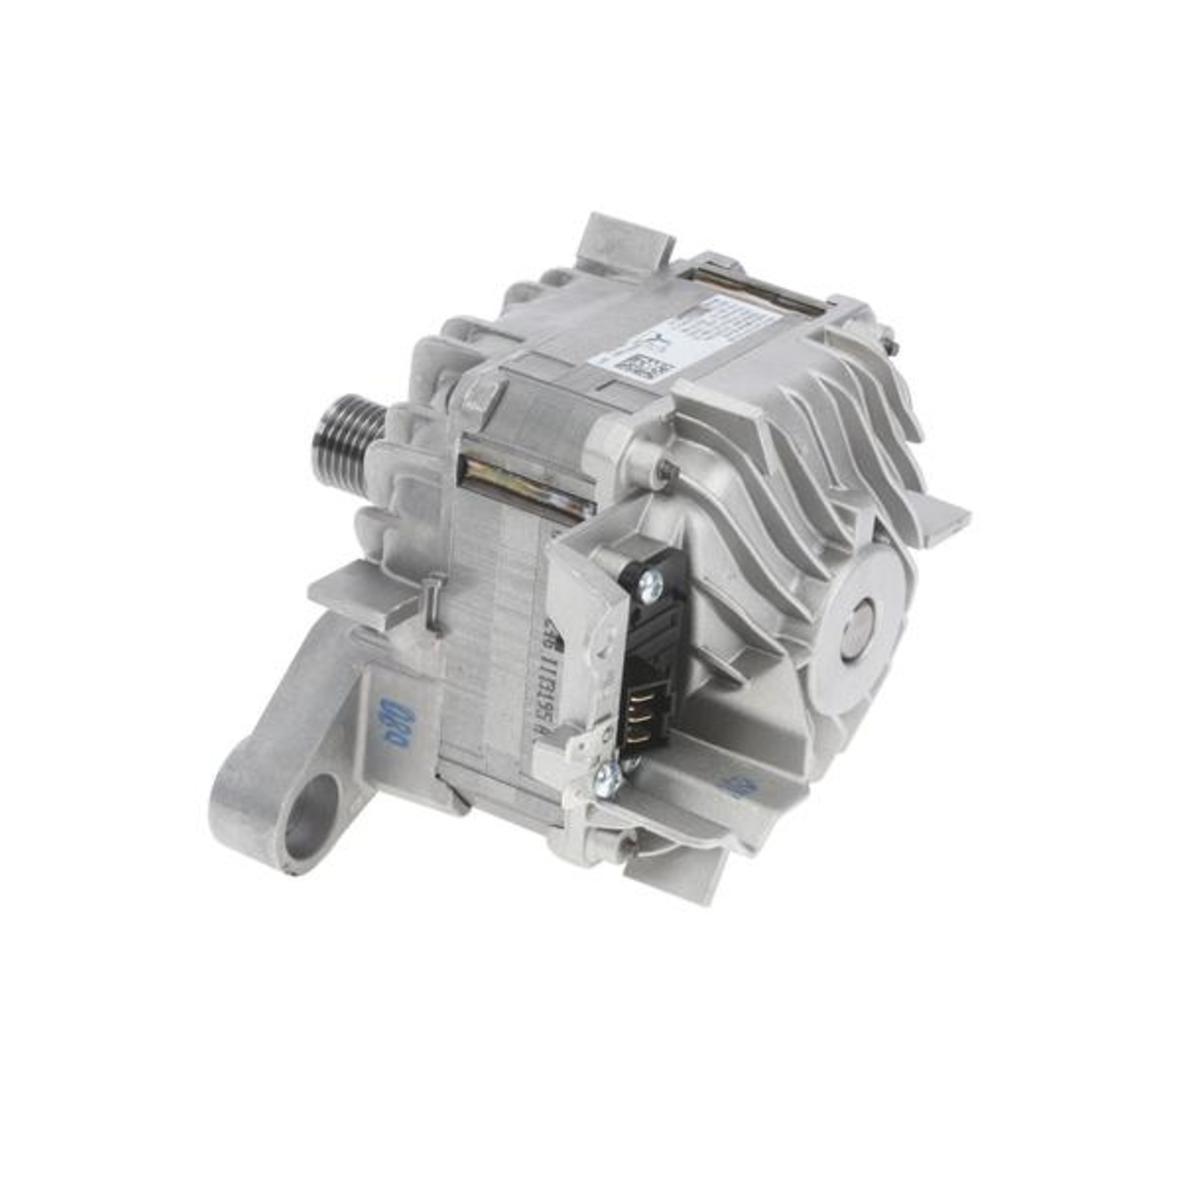 Motor 1600 UpM BLDC-FERRIT mit 2-Punkt Anbindung 00145459